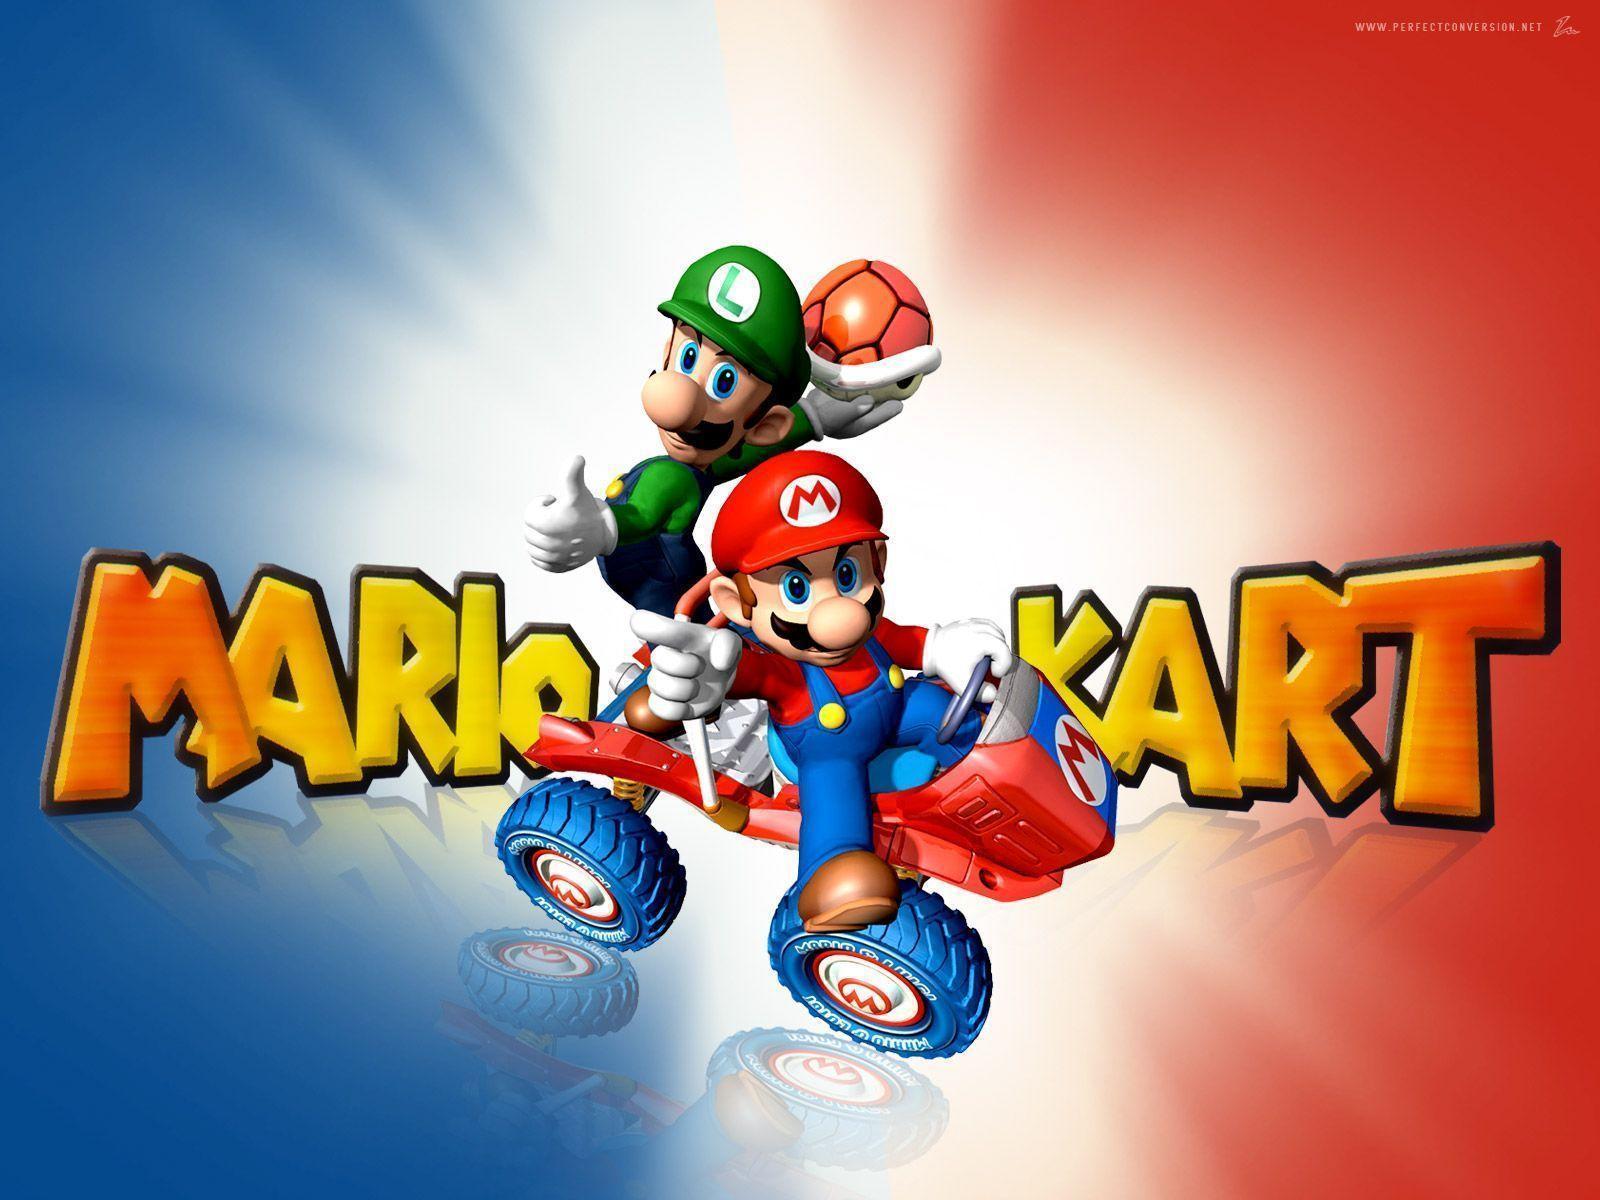 Mario Kart Wii Wallpaper Image & Picture